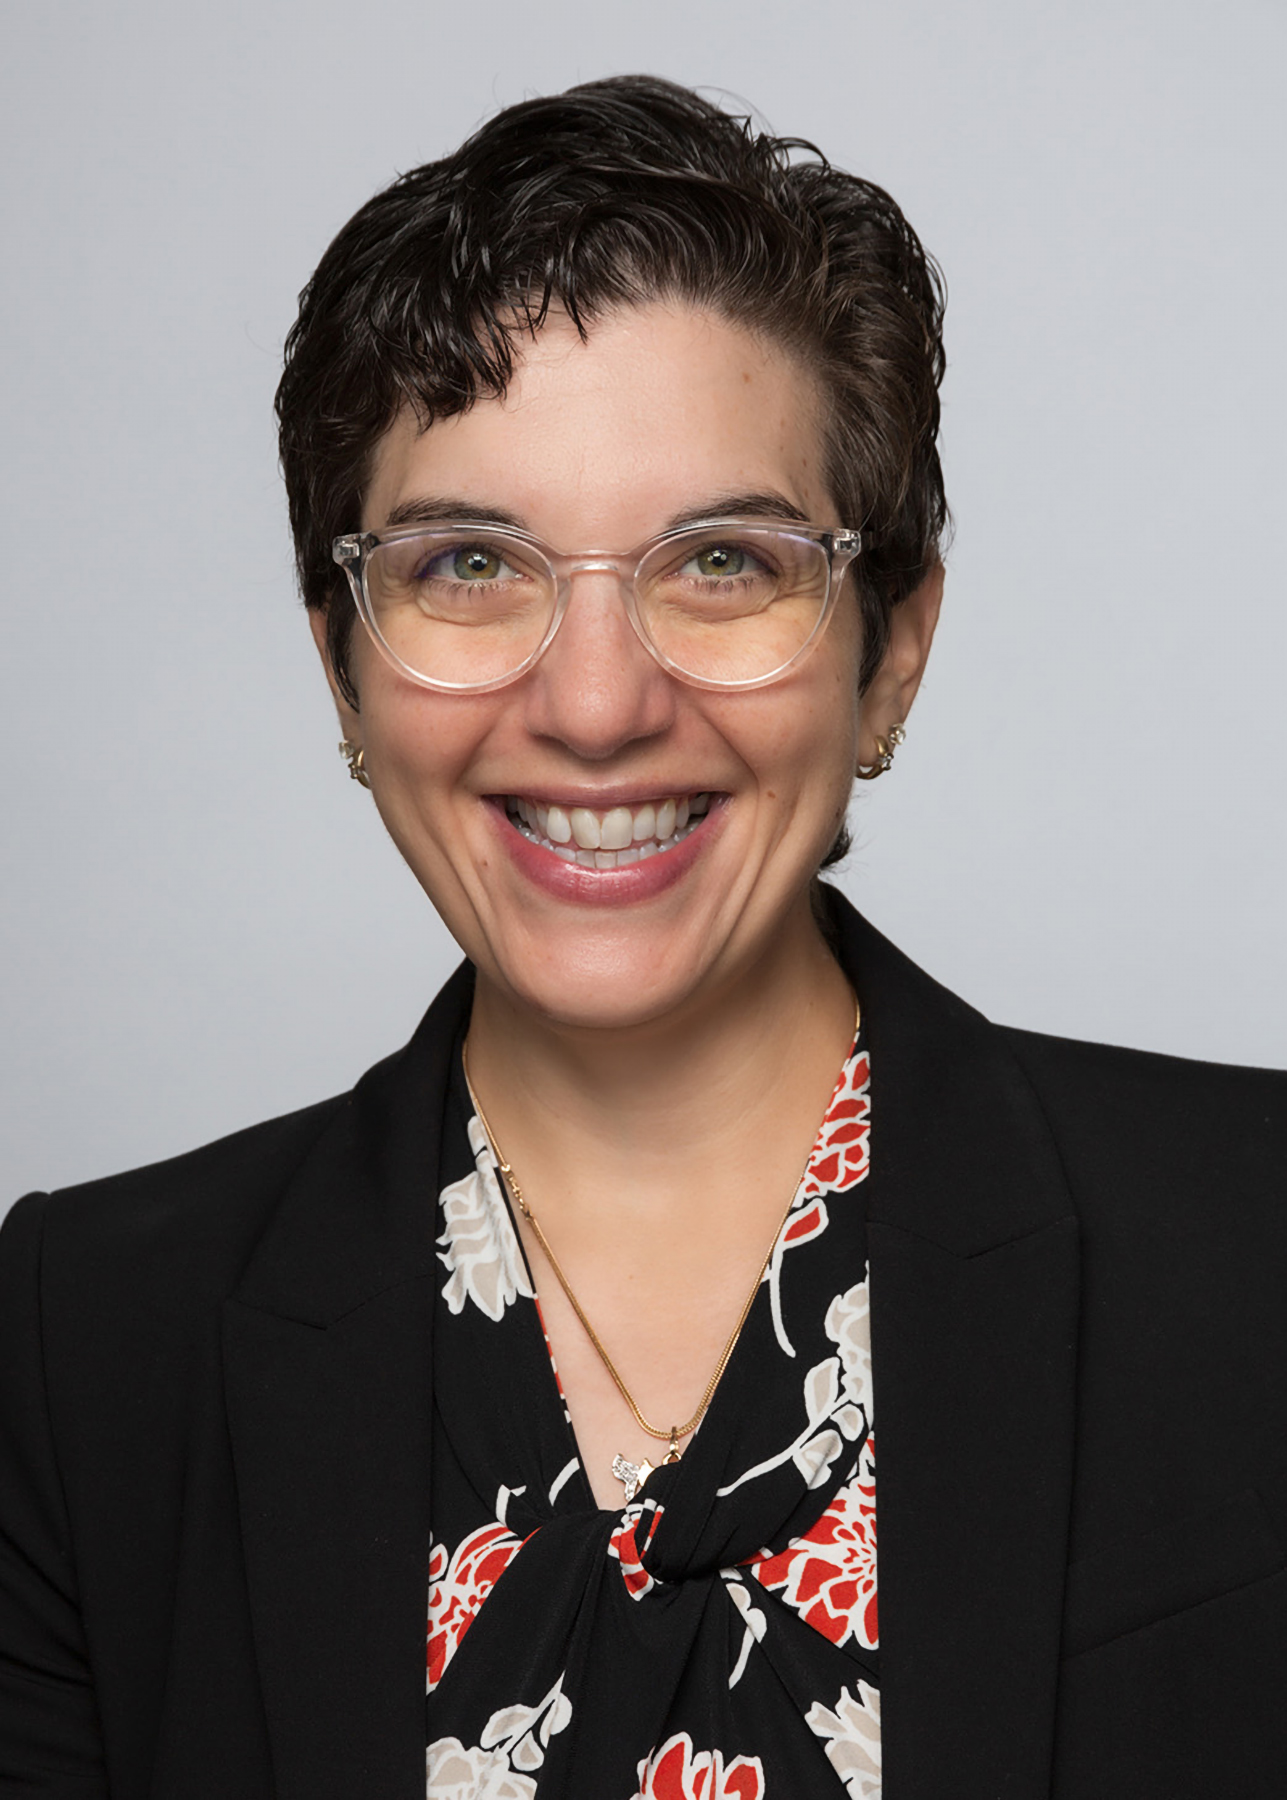 Dr. Haley Baum